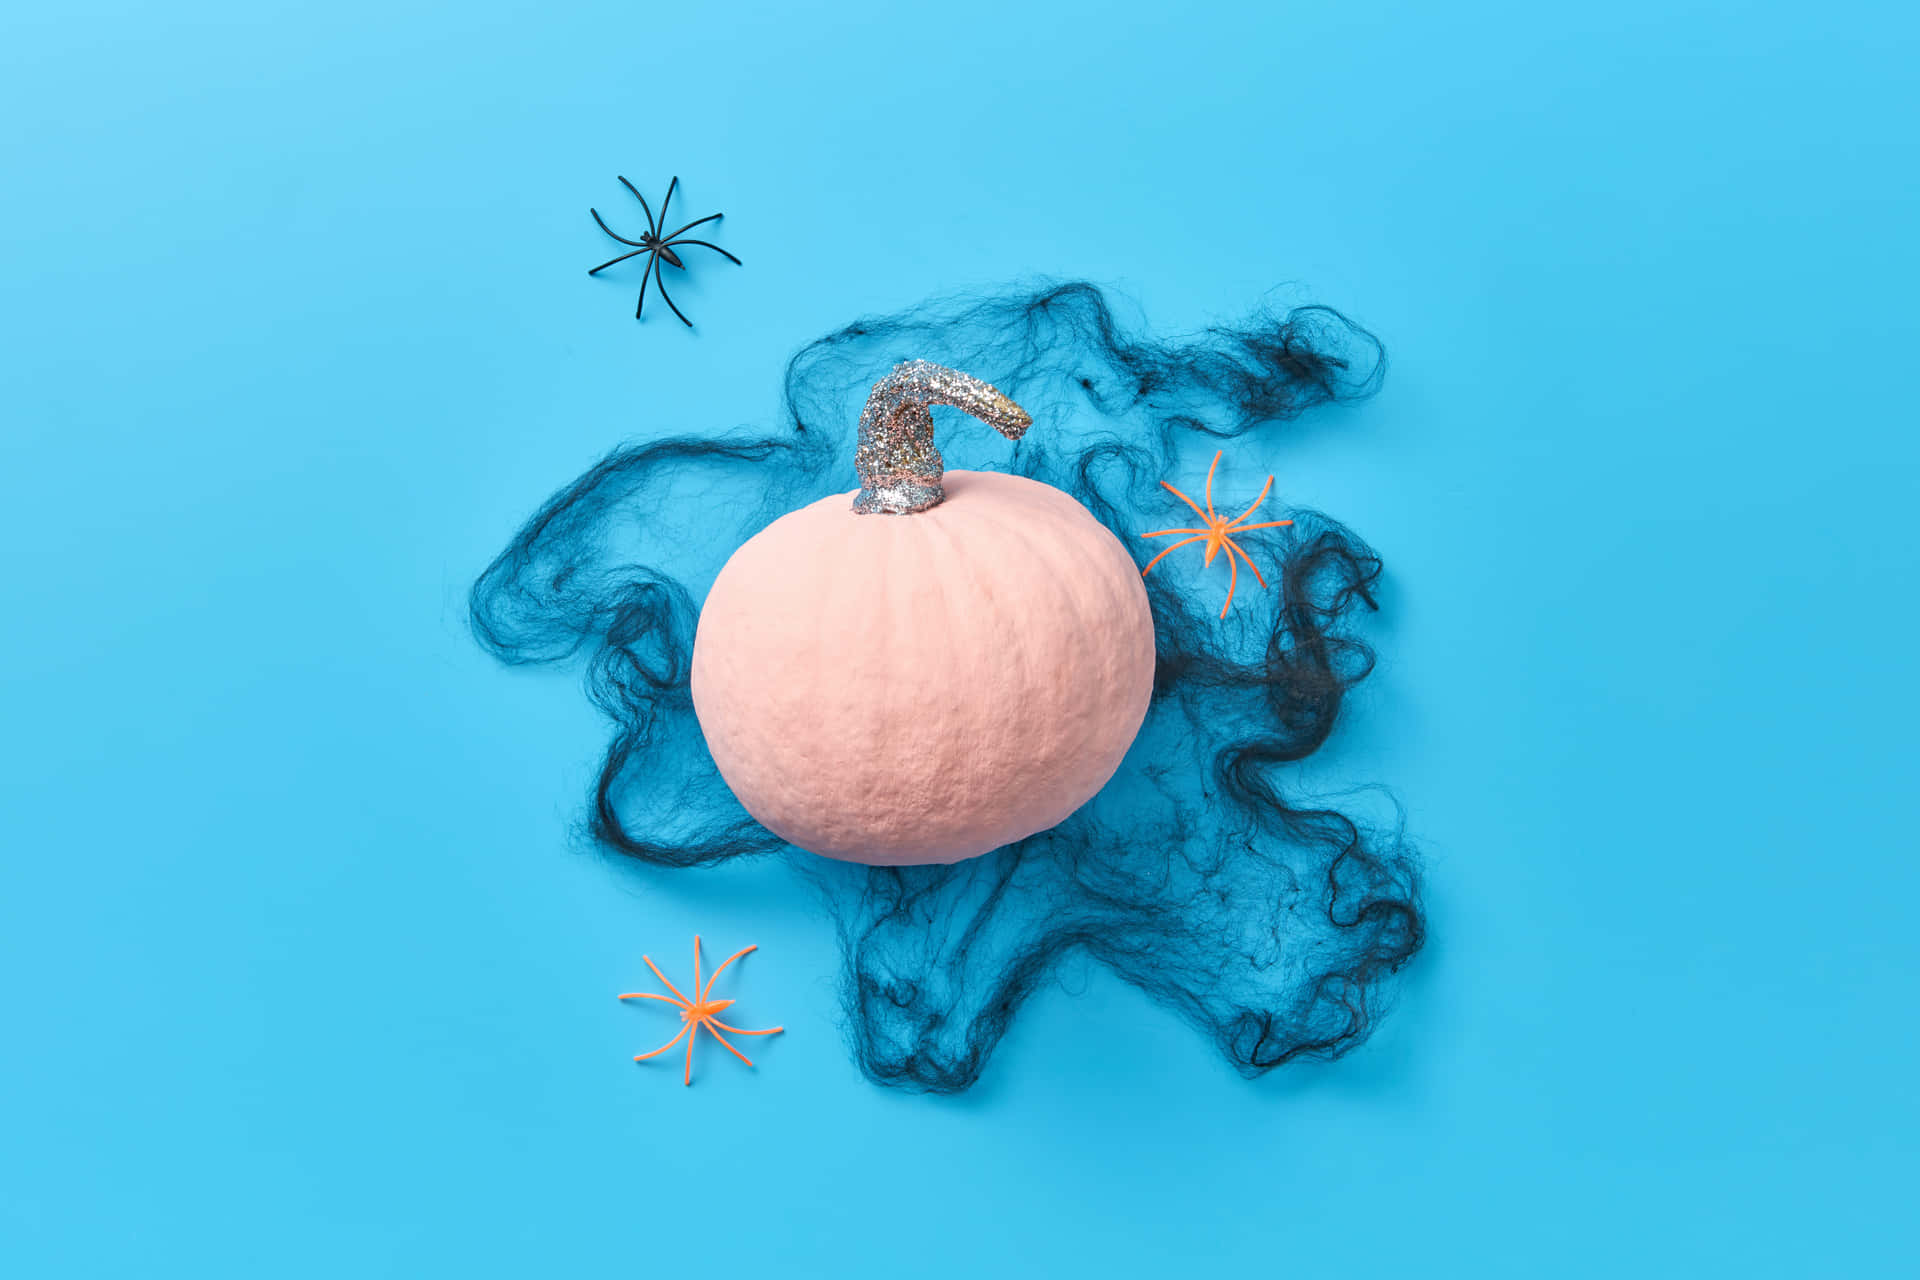 "A Vibrant Pink Pumpkin Against a Vibrant Orange Autumn Leaves" Wallpaper